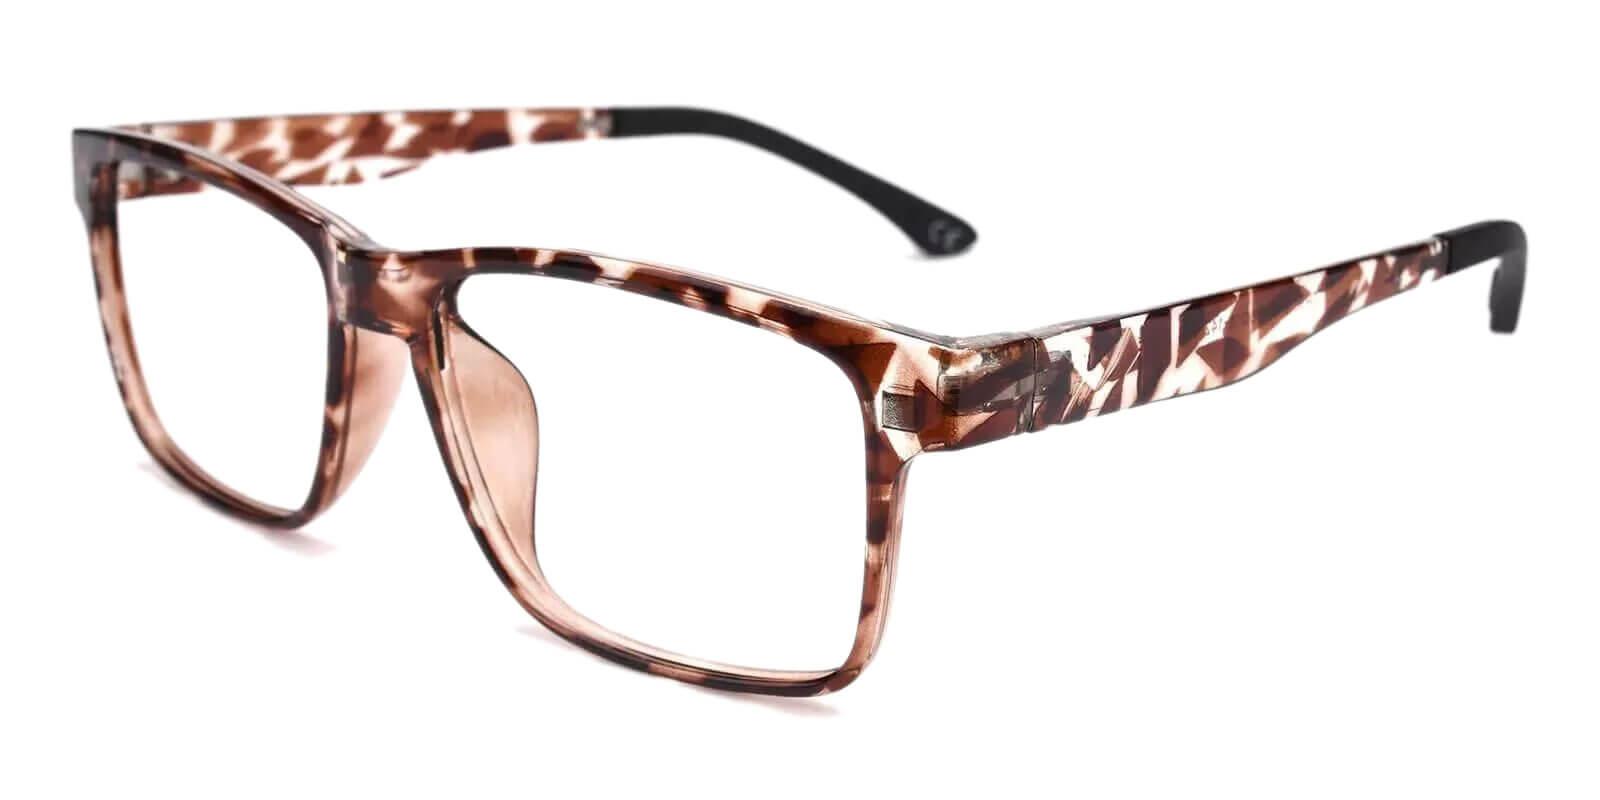 Austria Pattern Combination UniversalBridgeFit , Eyeglasses Frames from ABBE Glasses